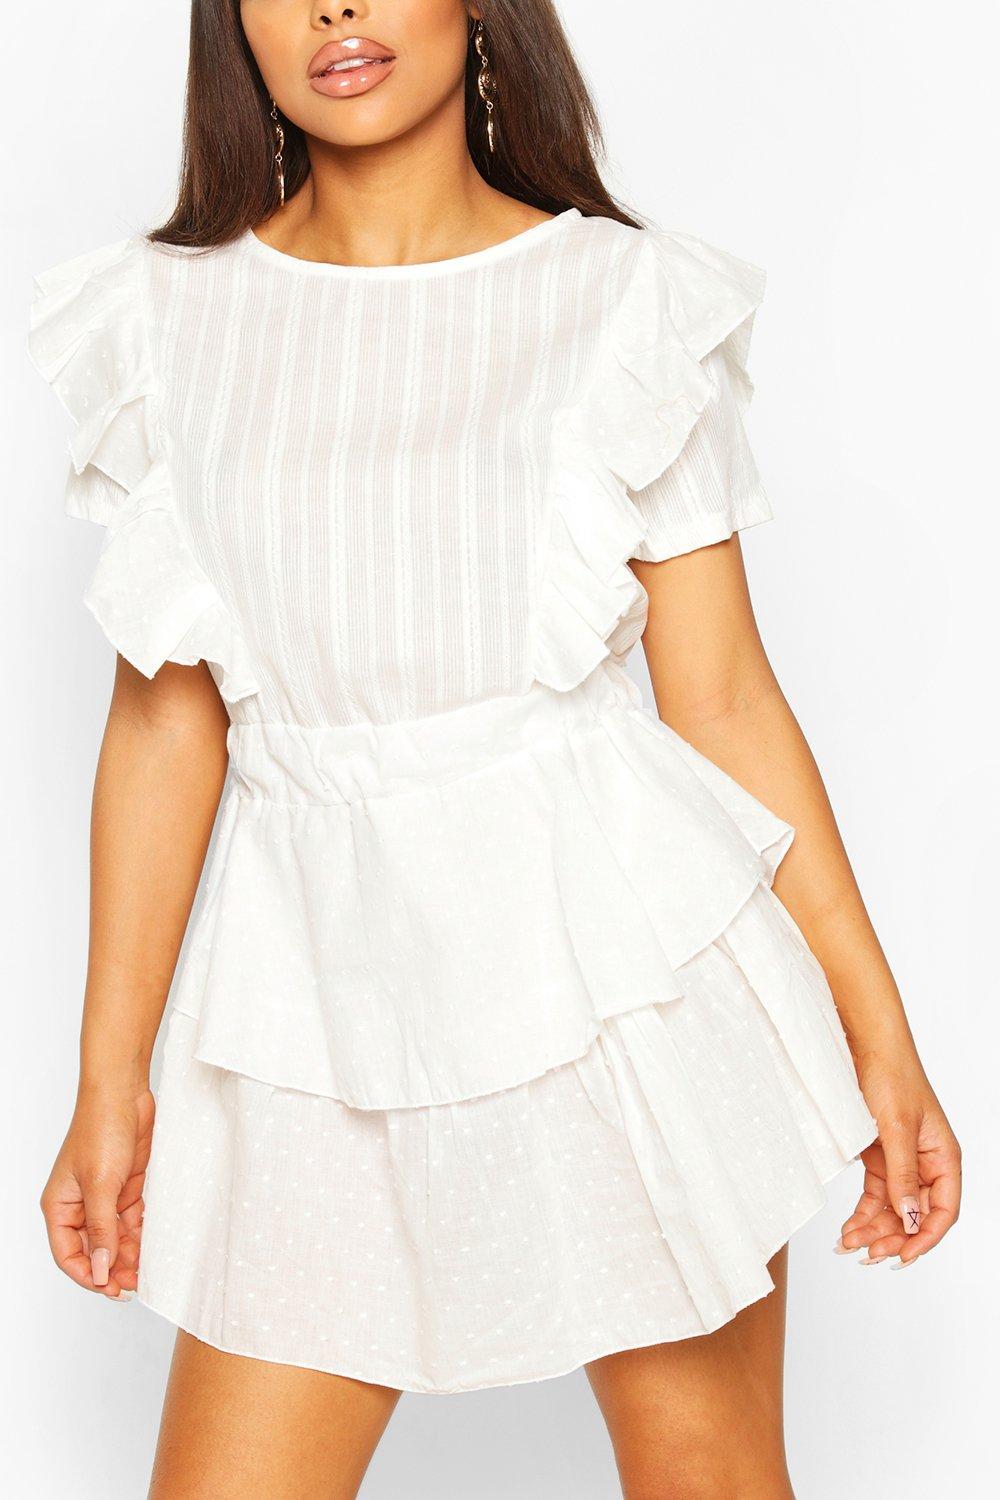 petite white dress uk